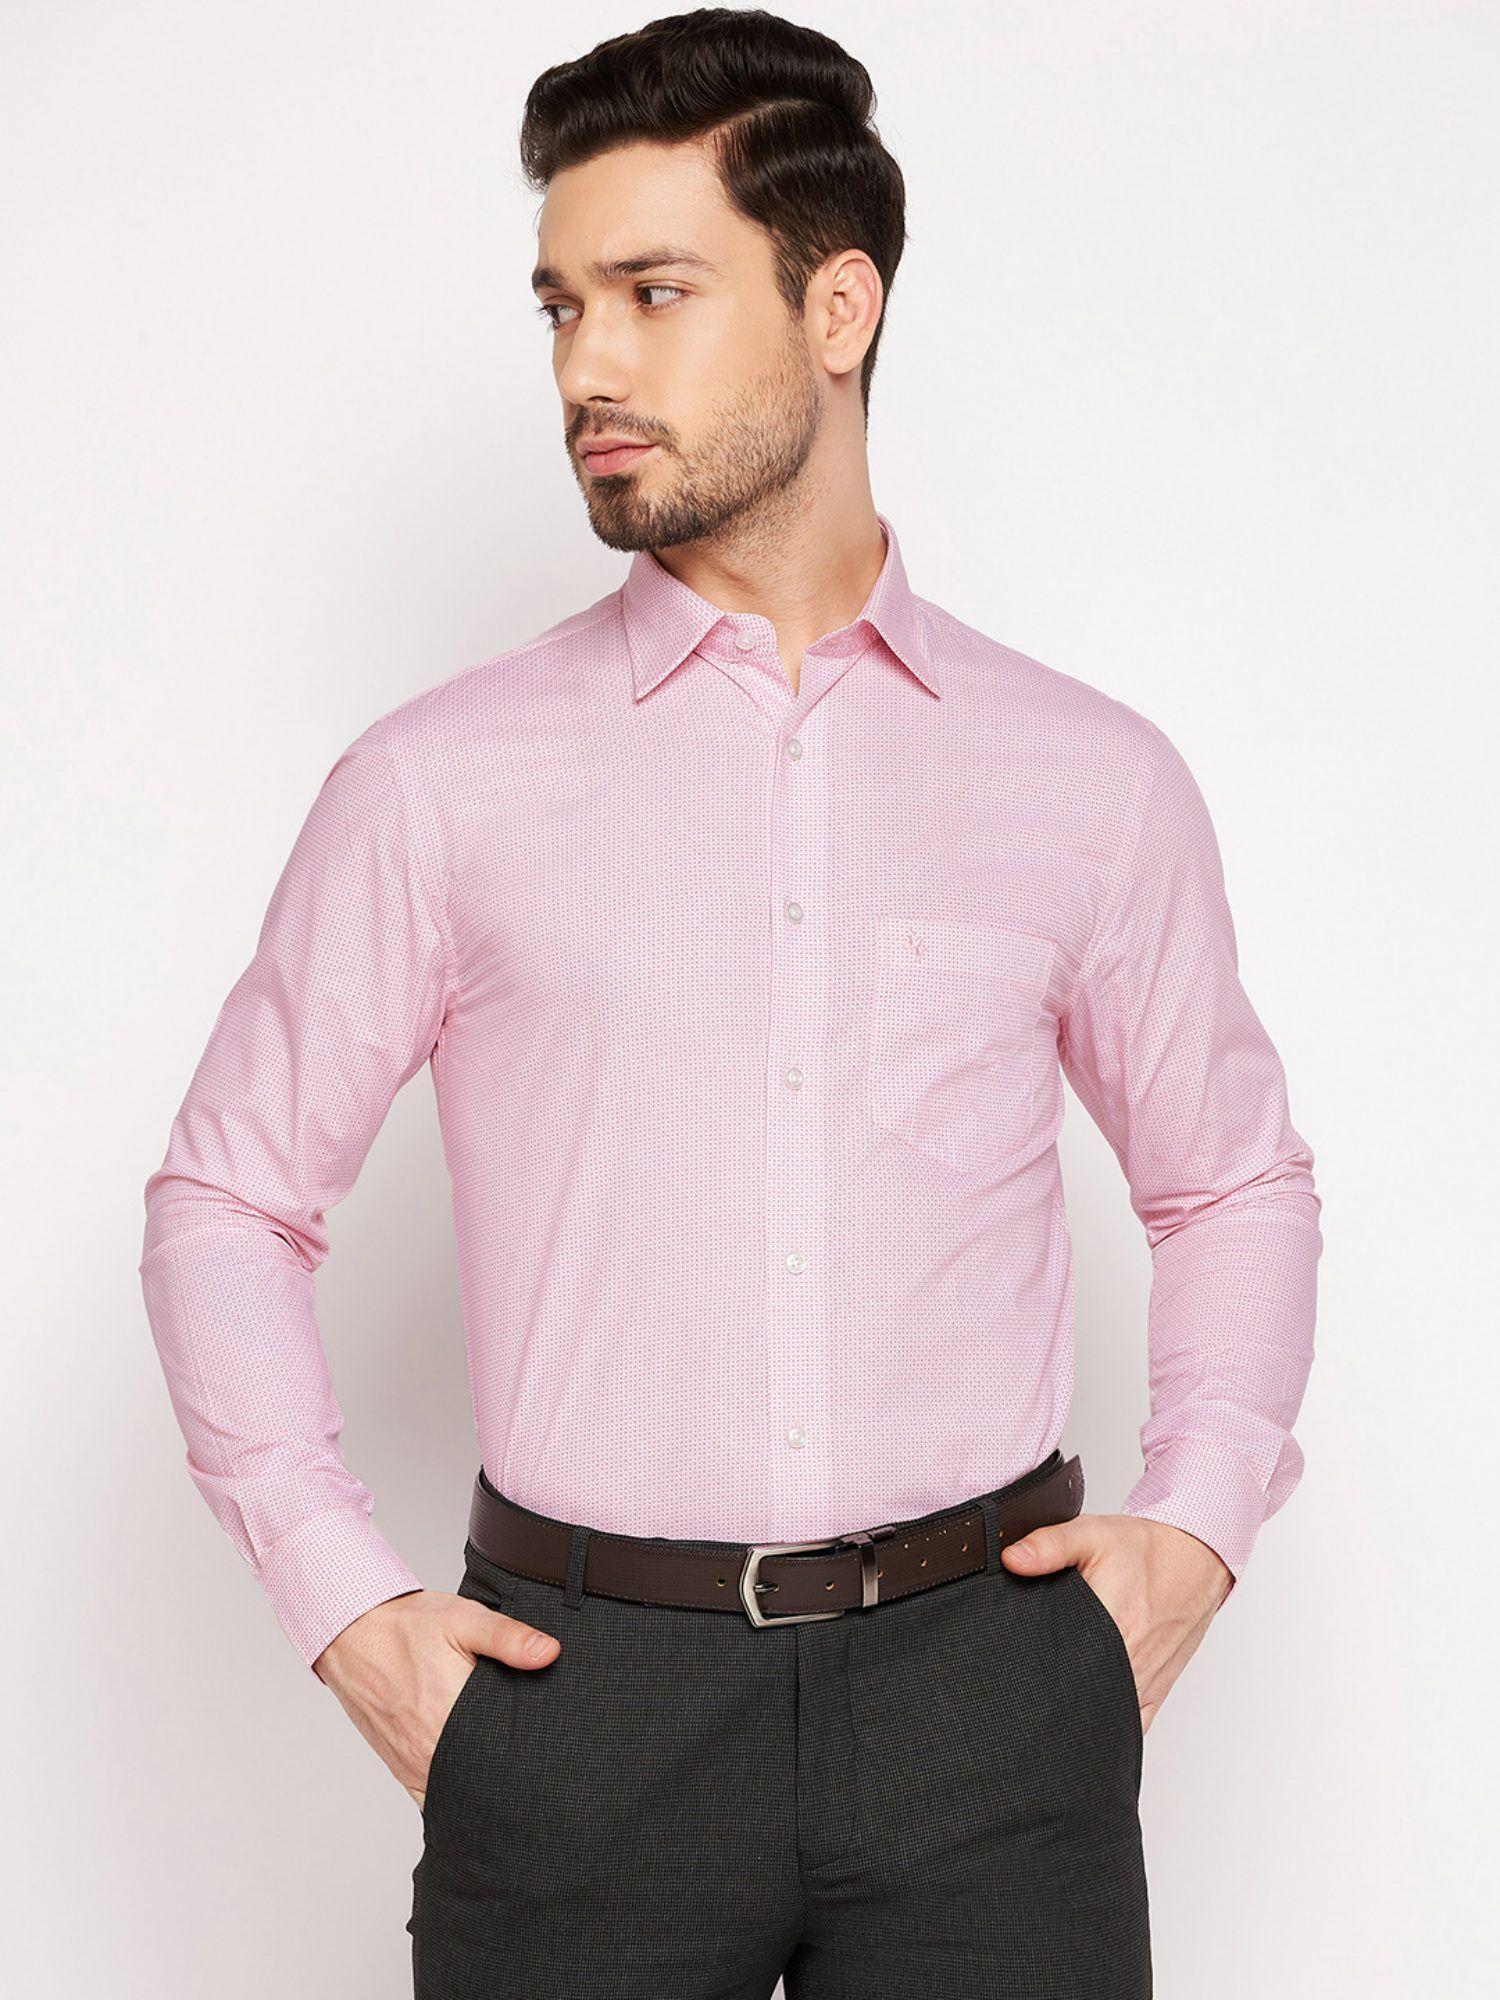 men-pink-shirt